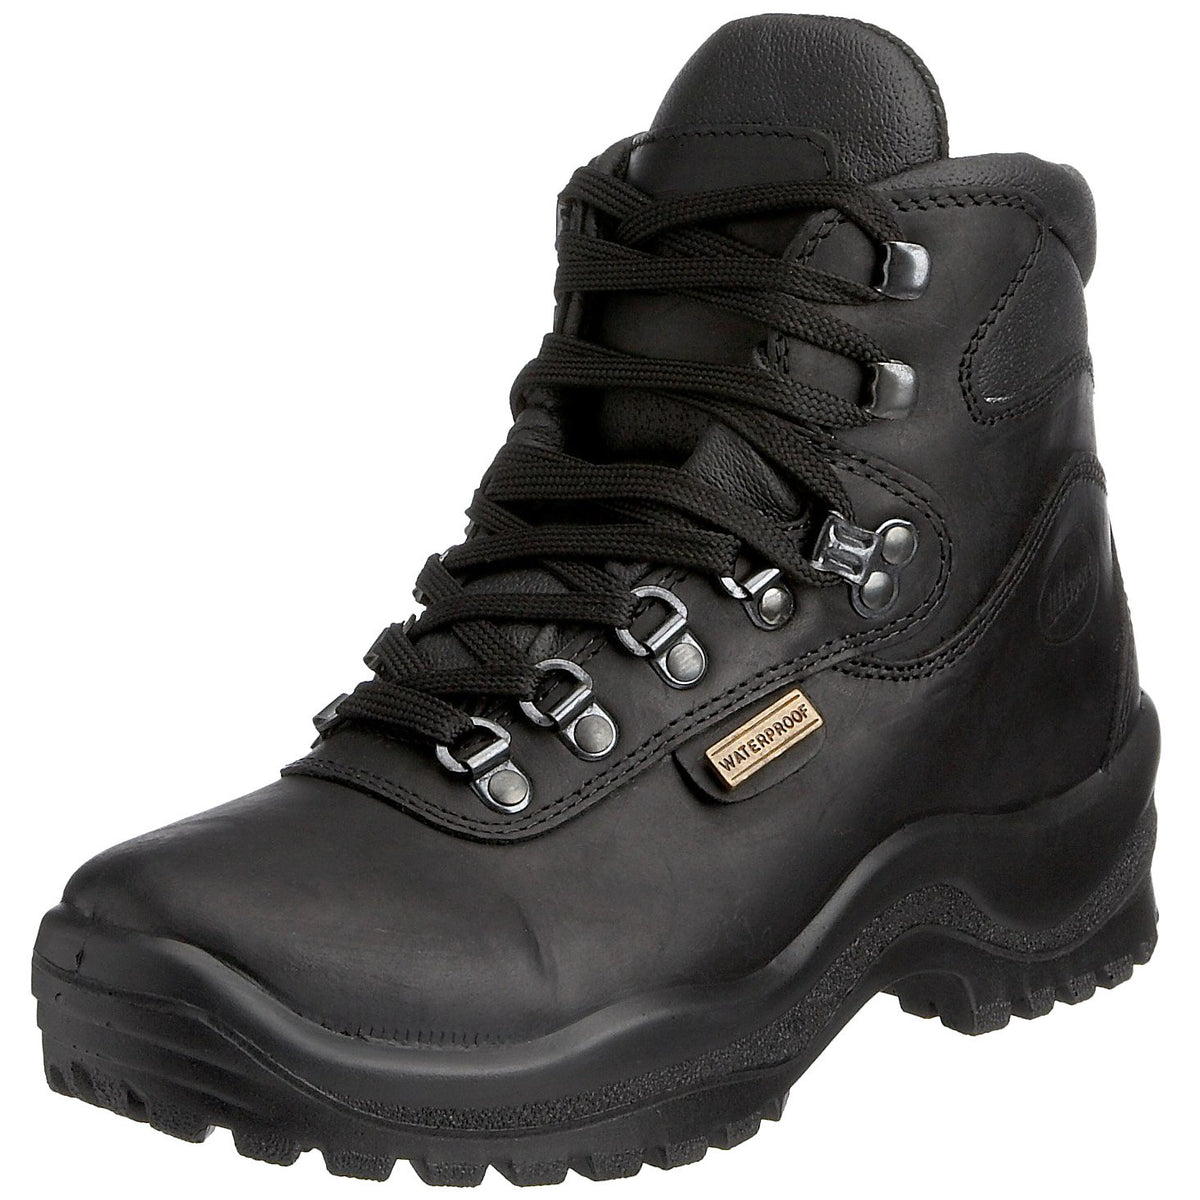 Grisport Men's Timber Hiking Boot, Black, 10 UK